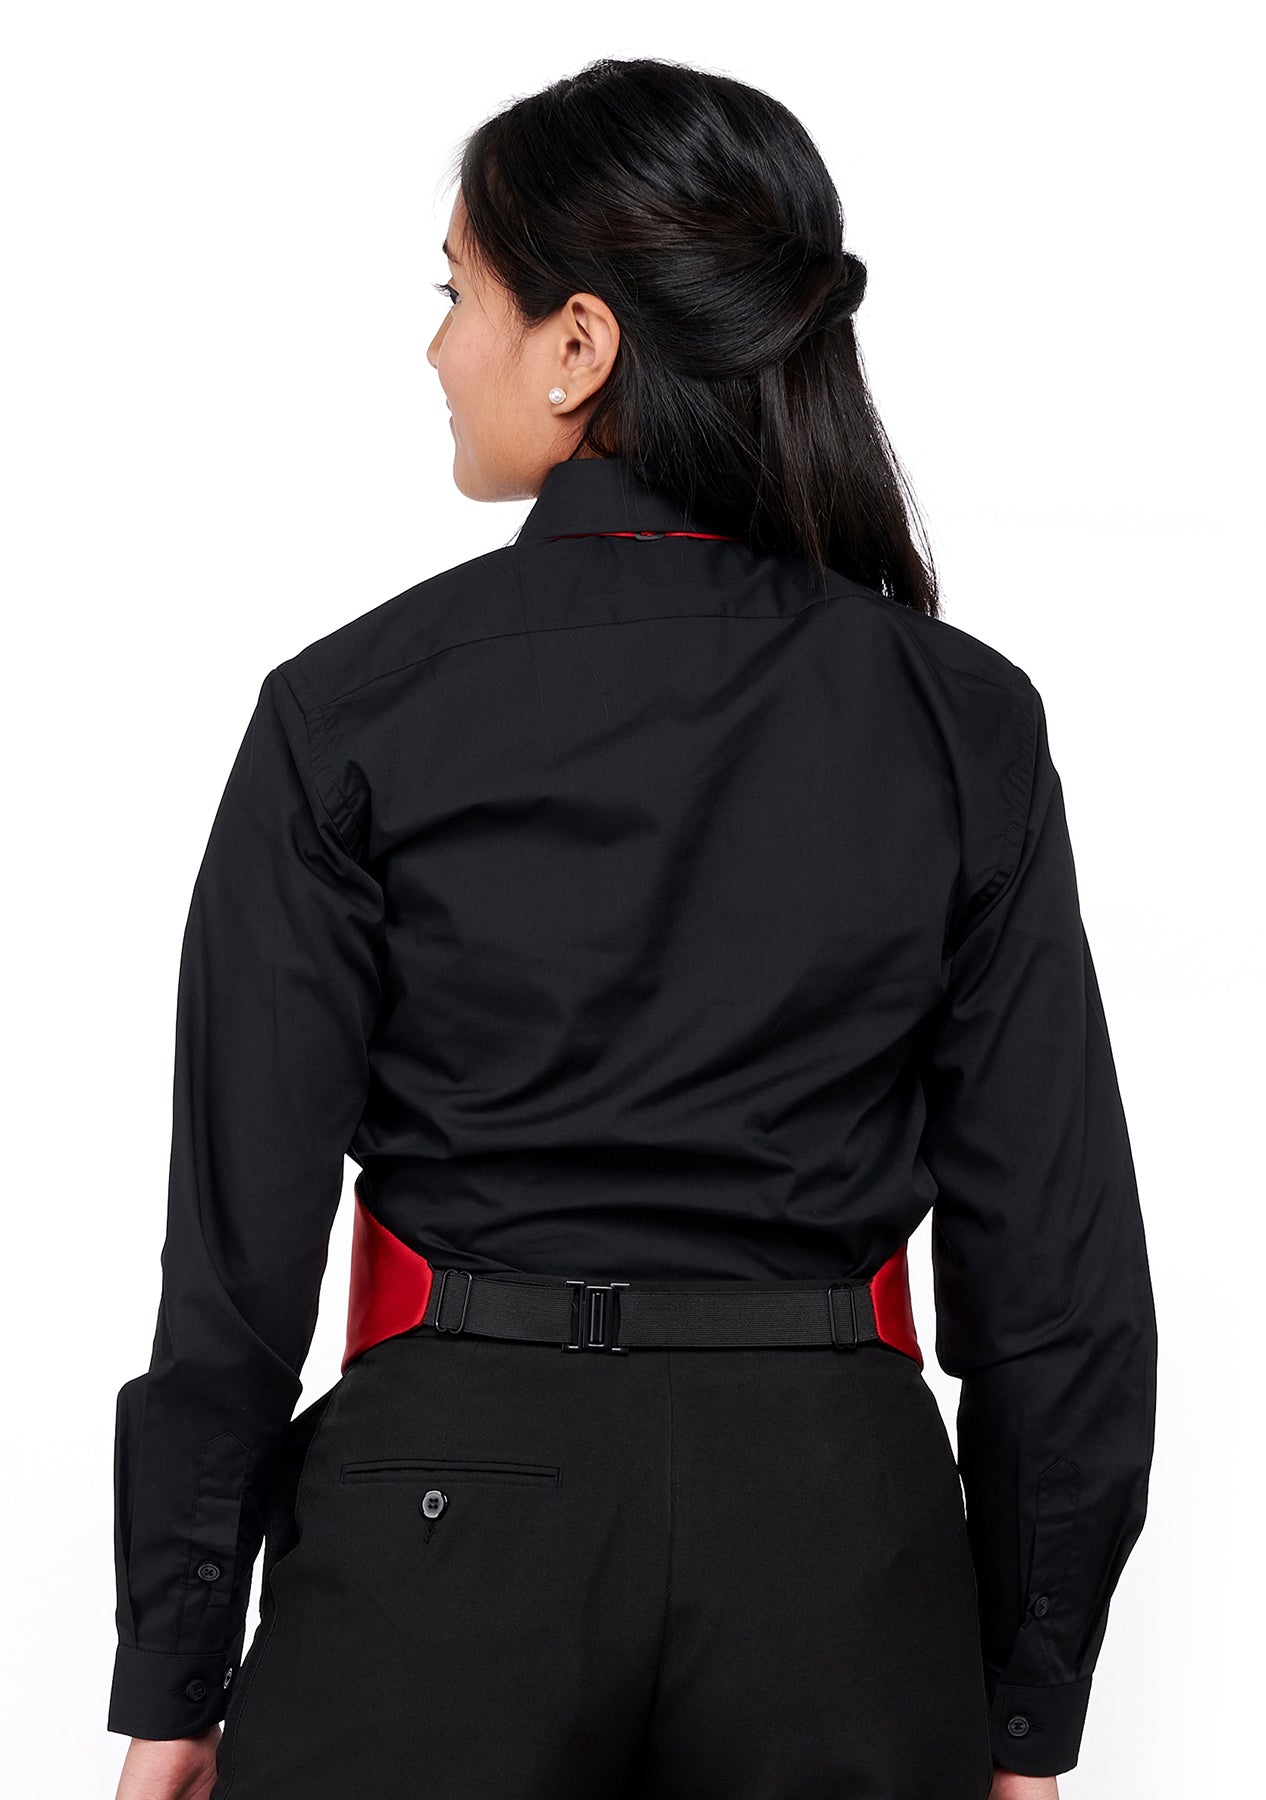 MORGAN (Style #6713L) - Ladies Black Shirt Ensemble Package